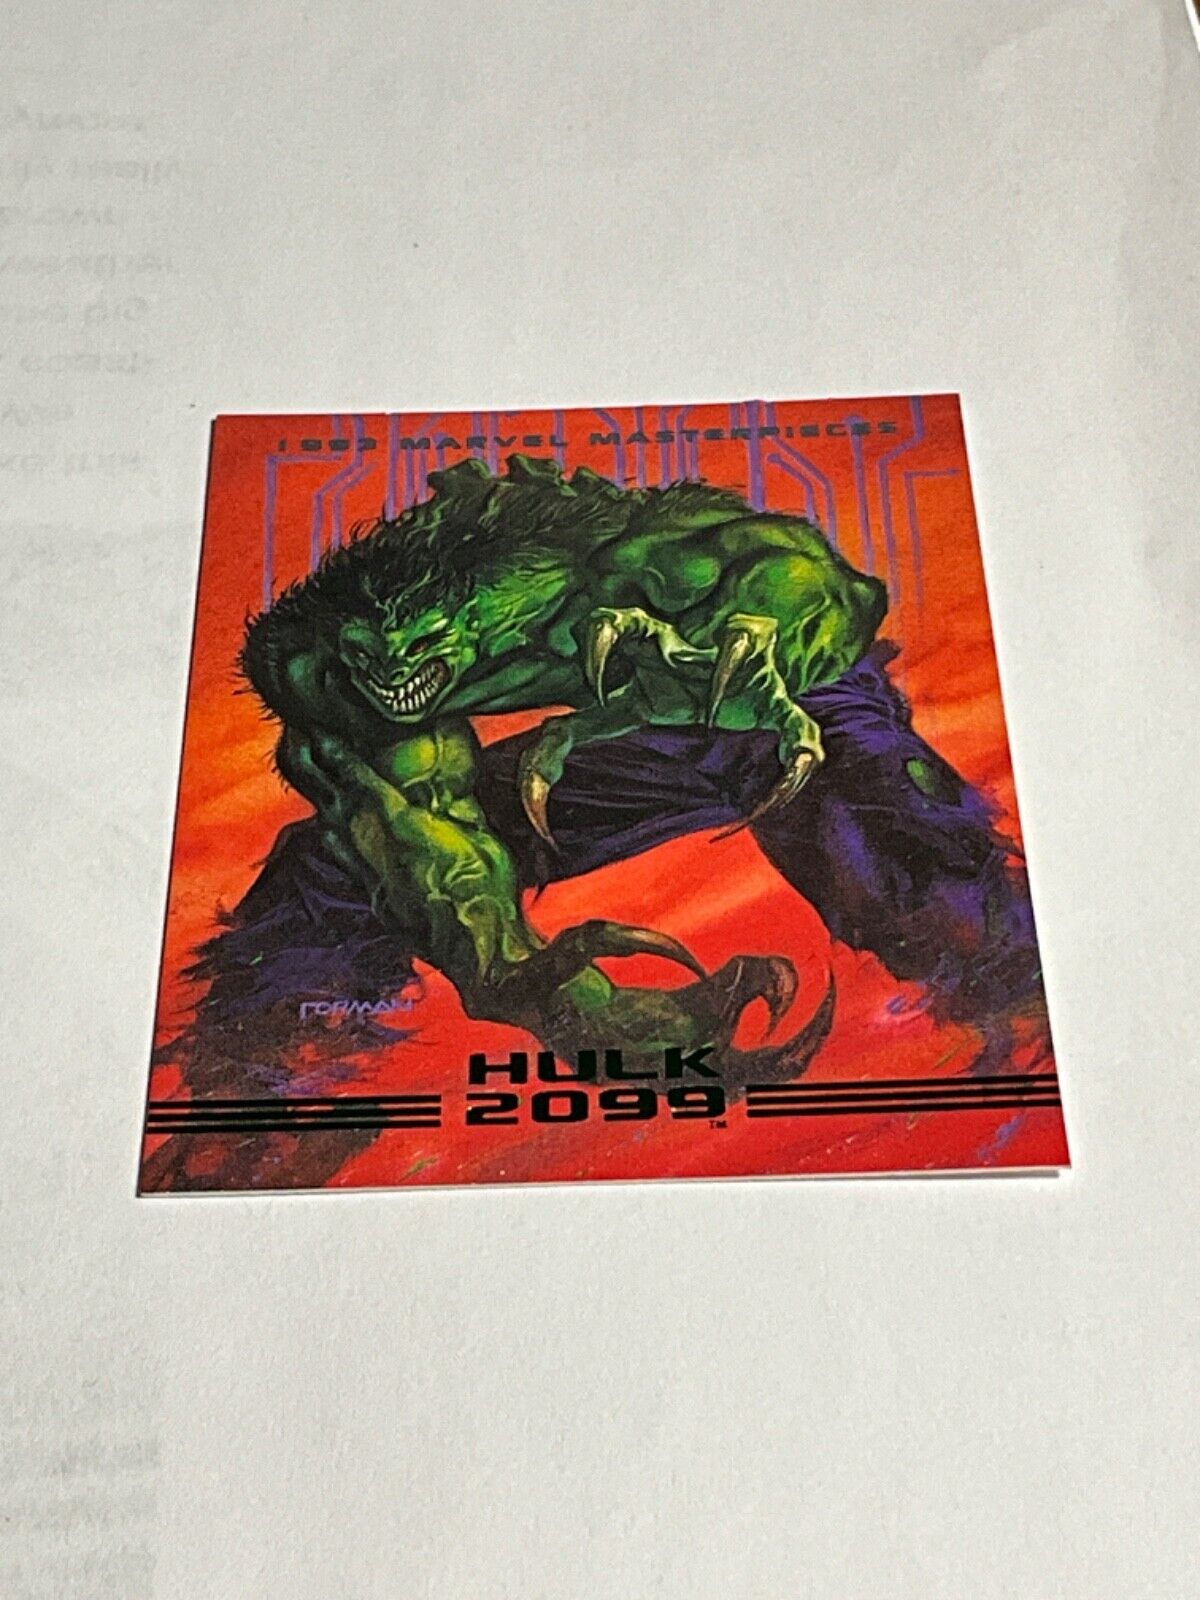 1993 Marvel Masterpieces Hulk 2099 Promo Card